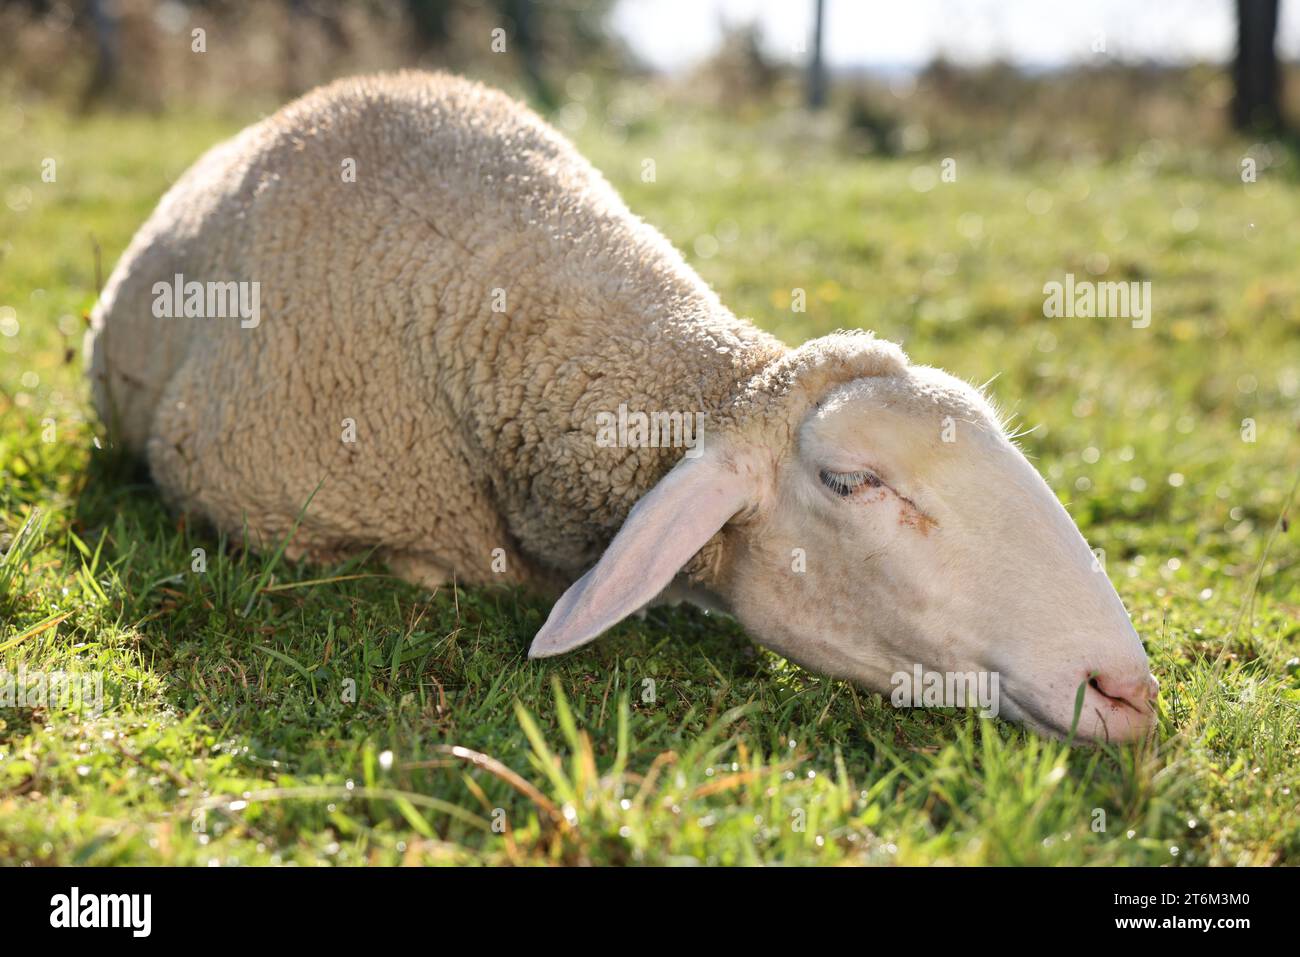 Cute sheep sleeping outdoors on sunny day. Farm animal Stock Photo